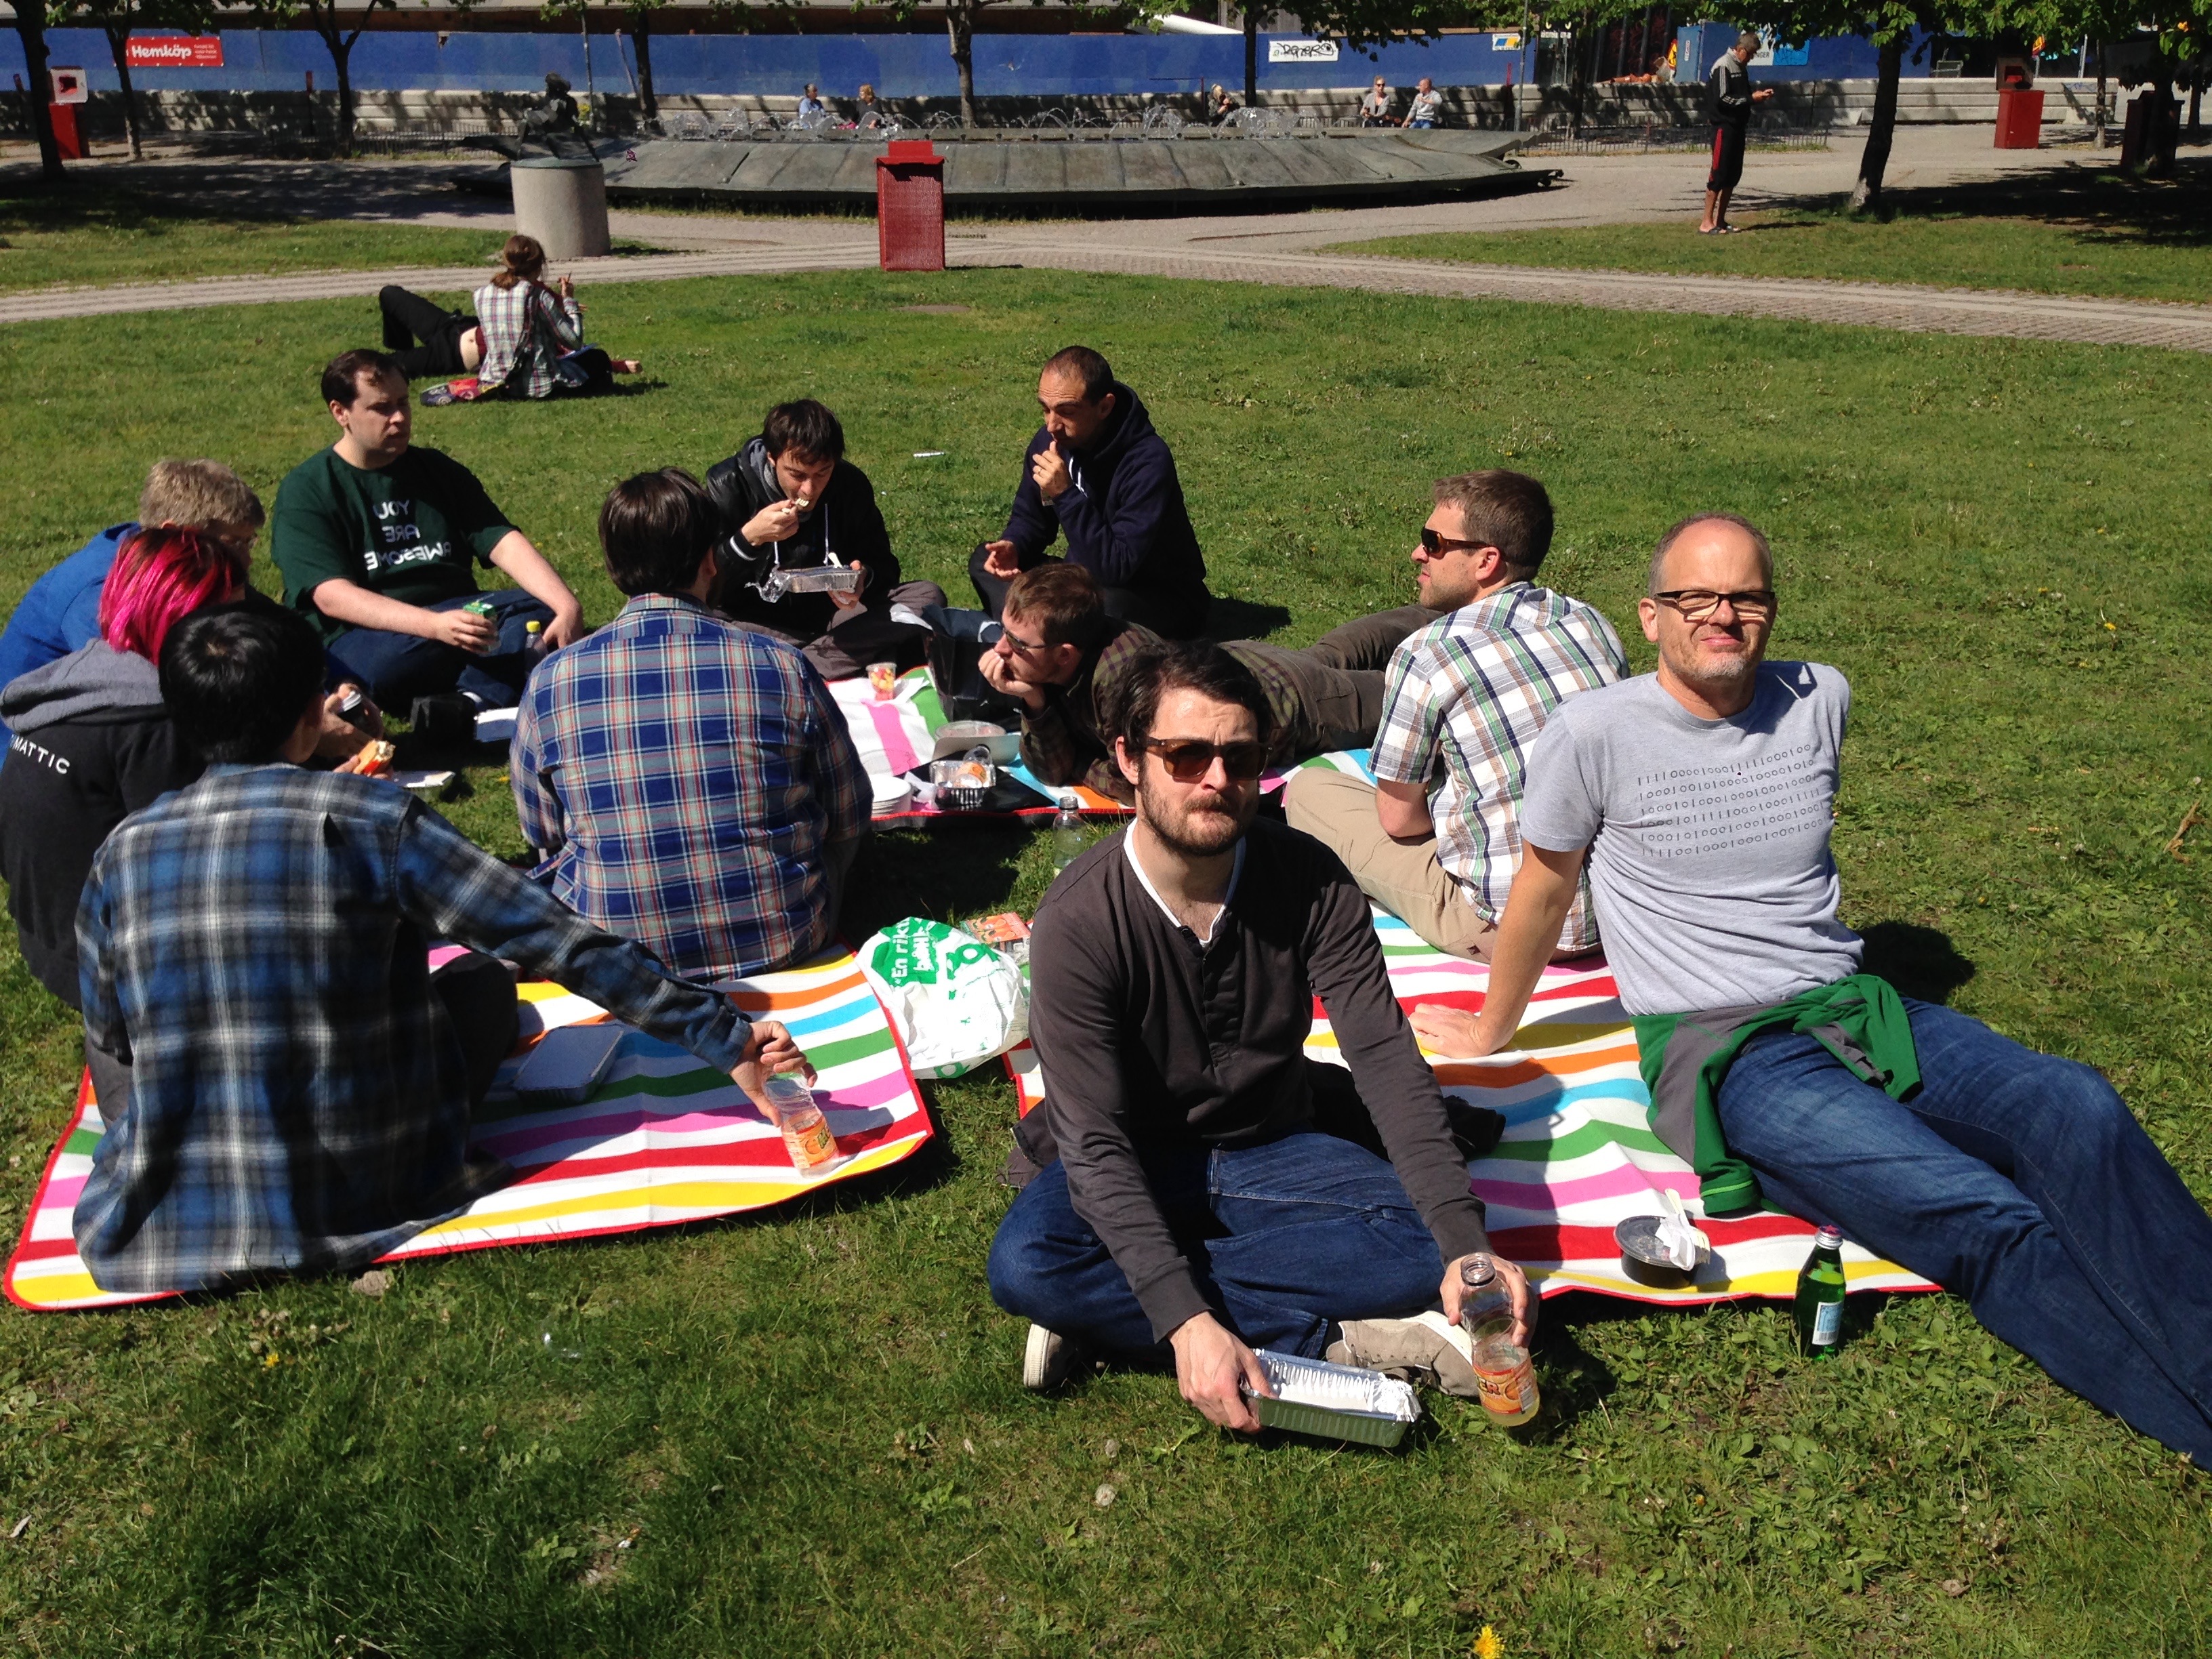 Team Data enjoying the sun in Stockholm